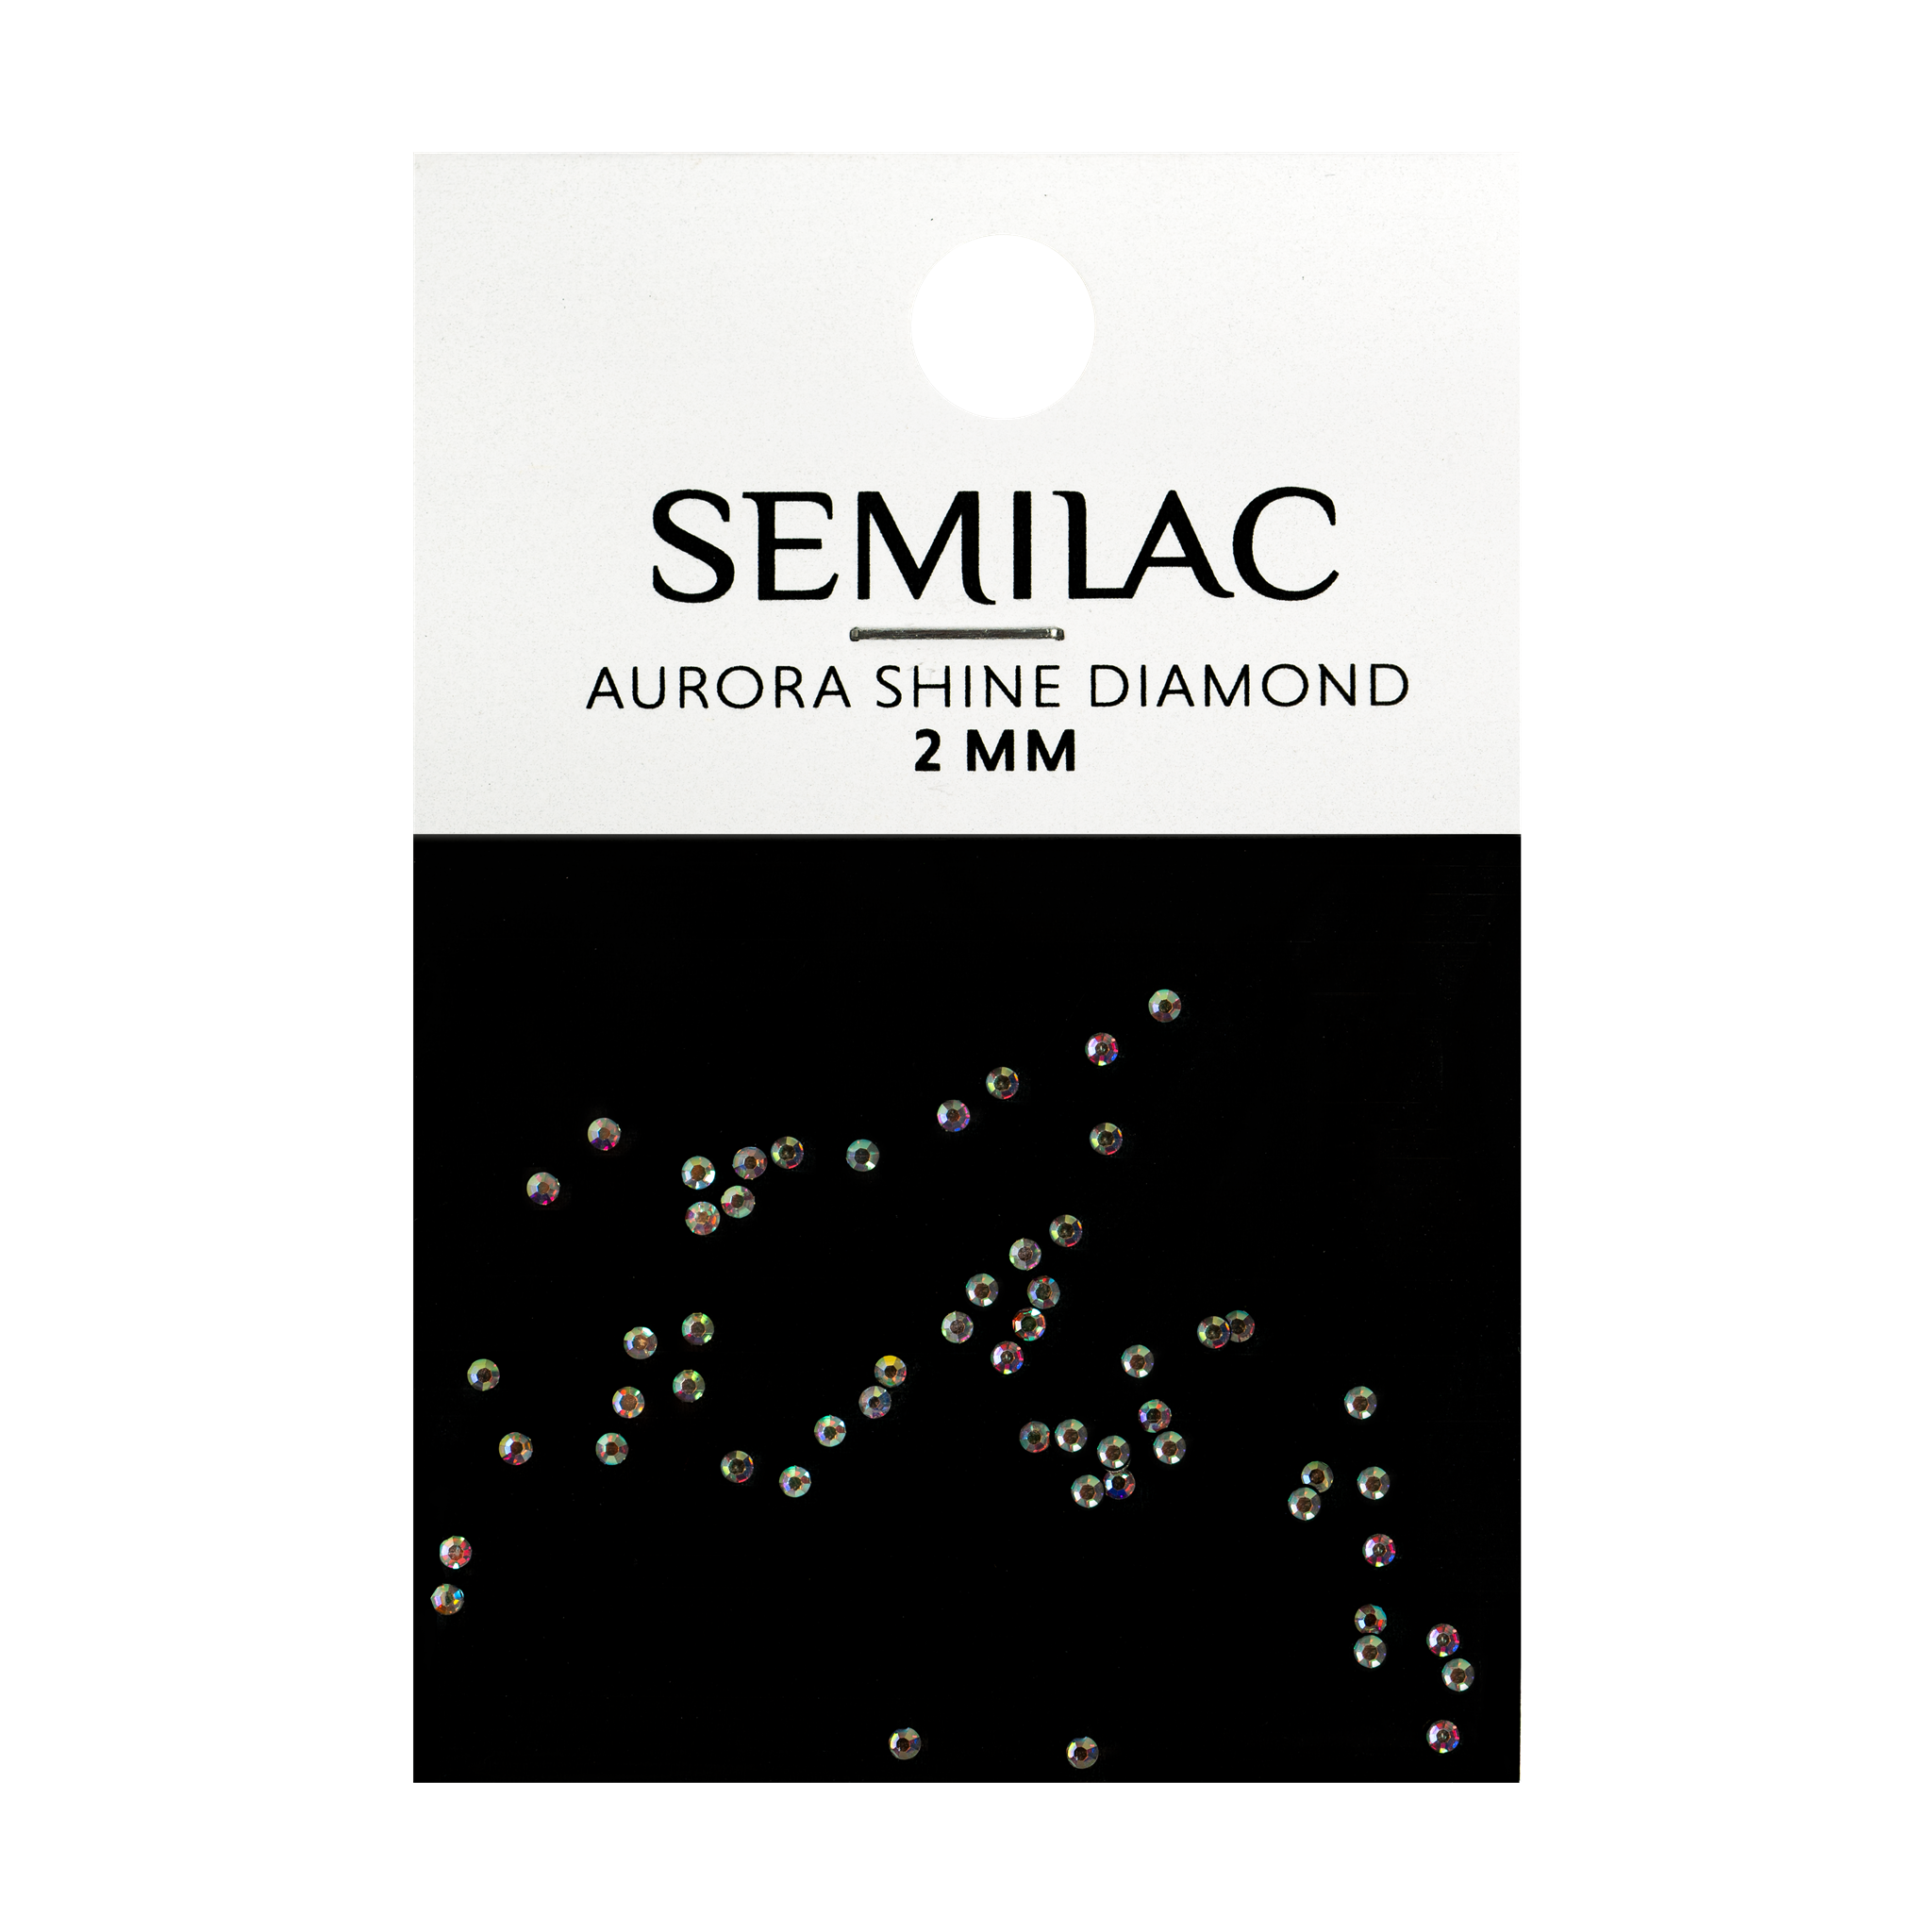 Semilac Decoration Aurora Shine Diamond 2mm - Semilac UK